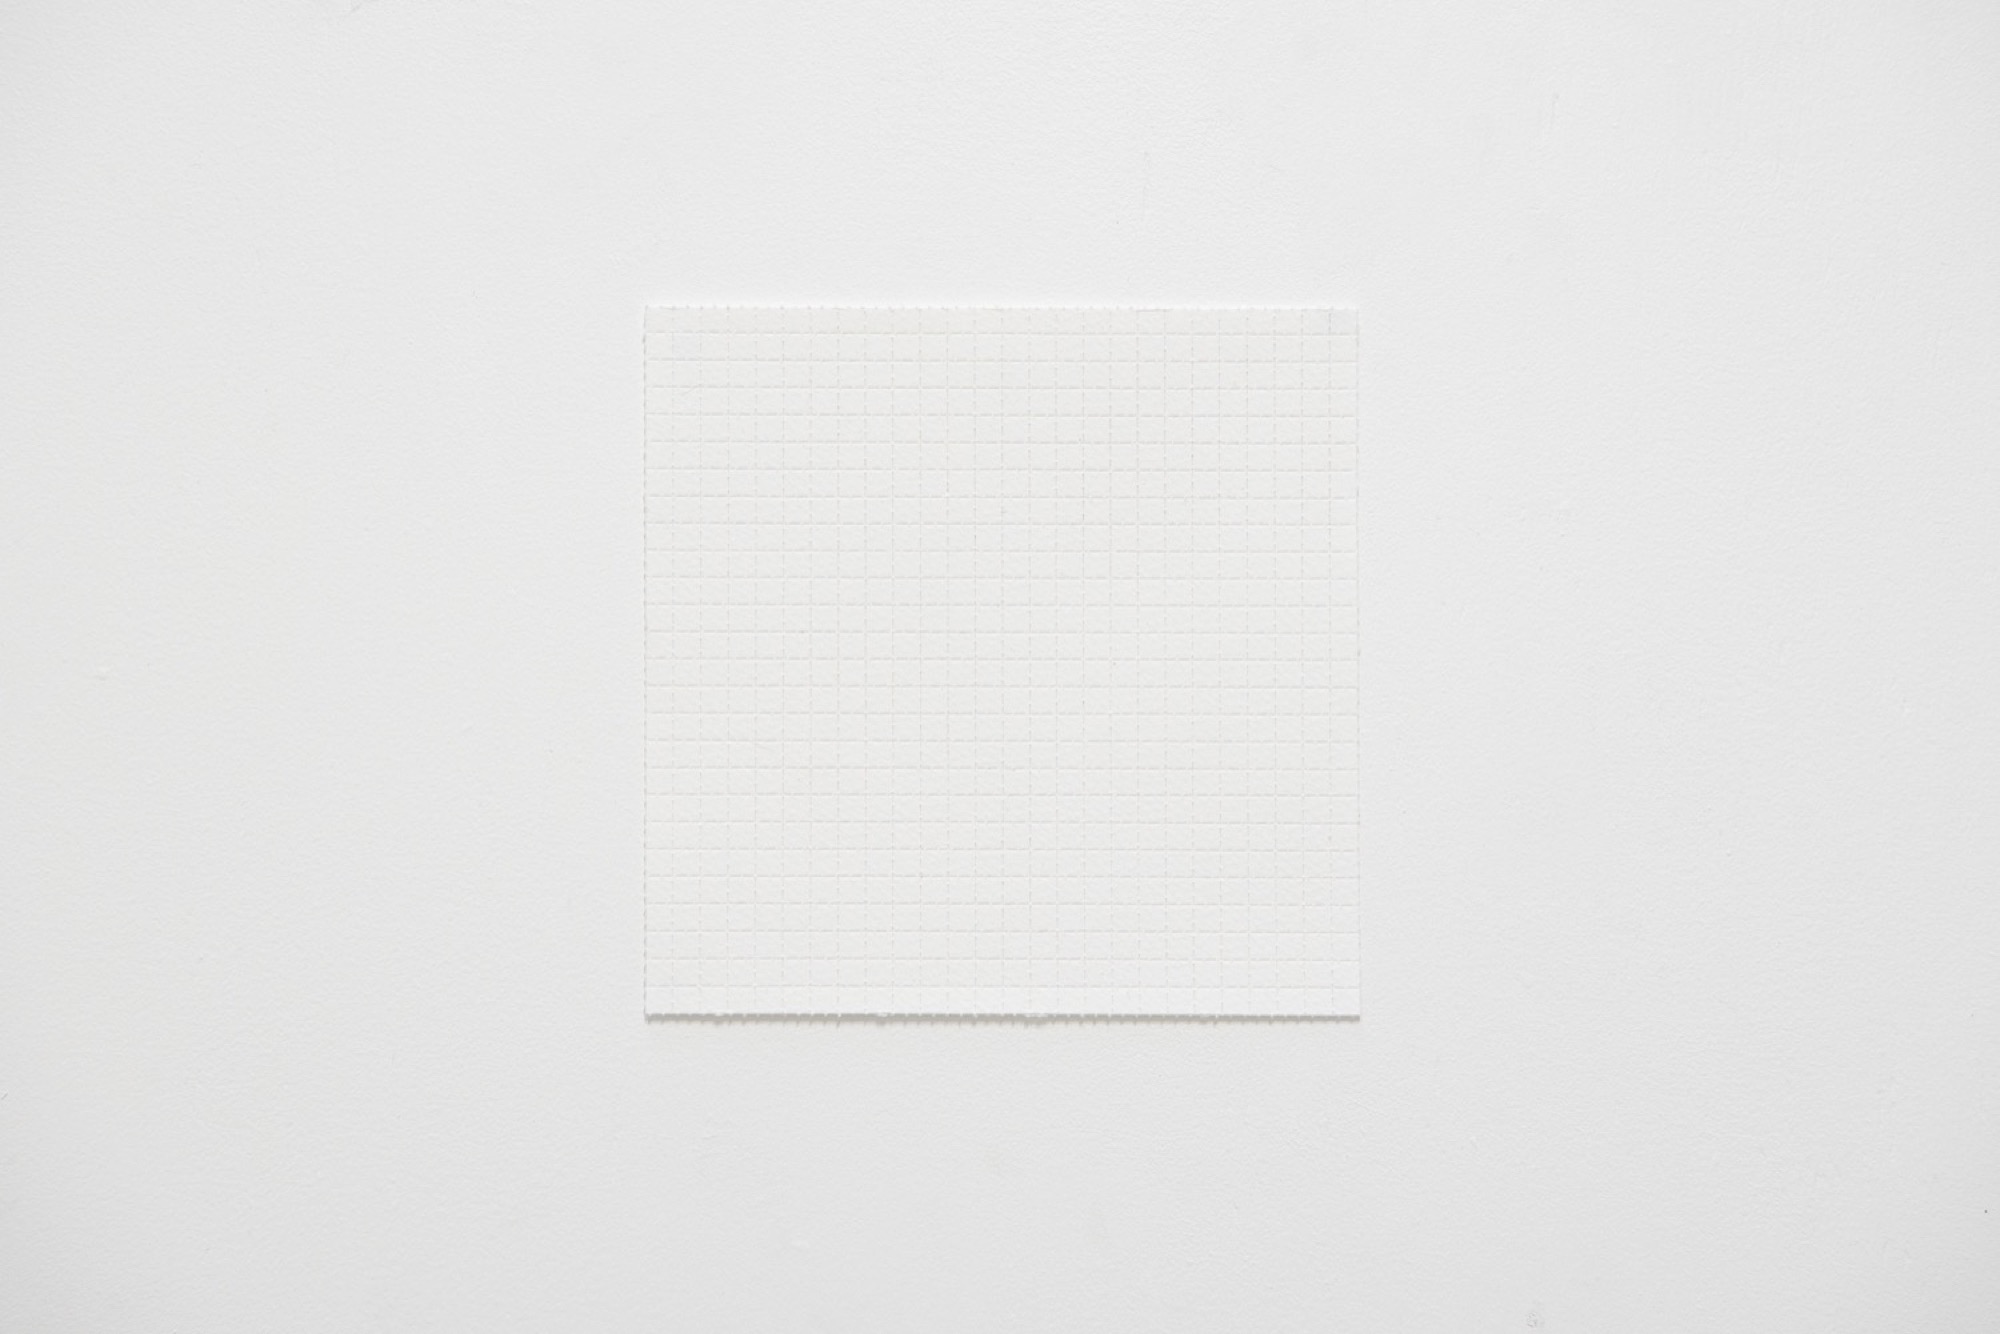 Rex Veal, <em>Untitled</em>, 2020, perforated acid-free blotter paper, 162mm x 162mm. Bossy’s Gallery. Photo: Jordan Halsall.